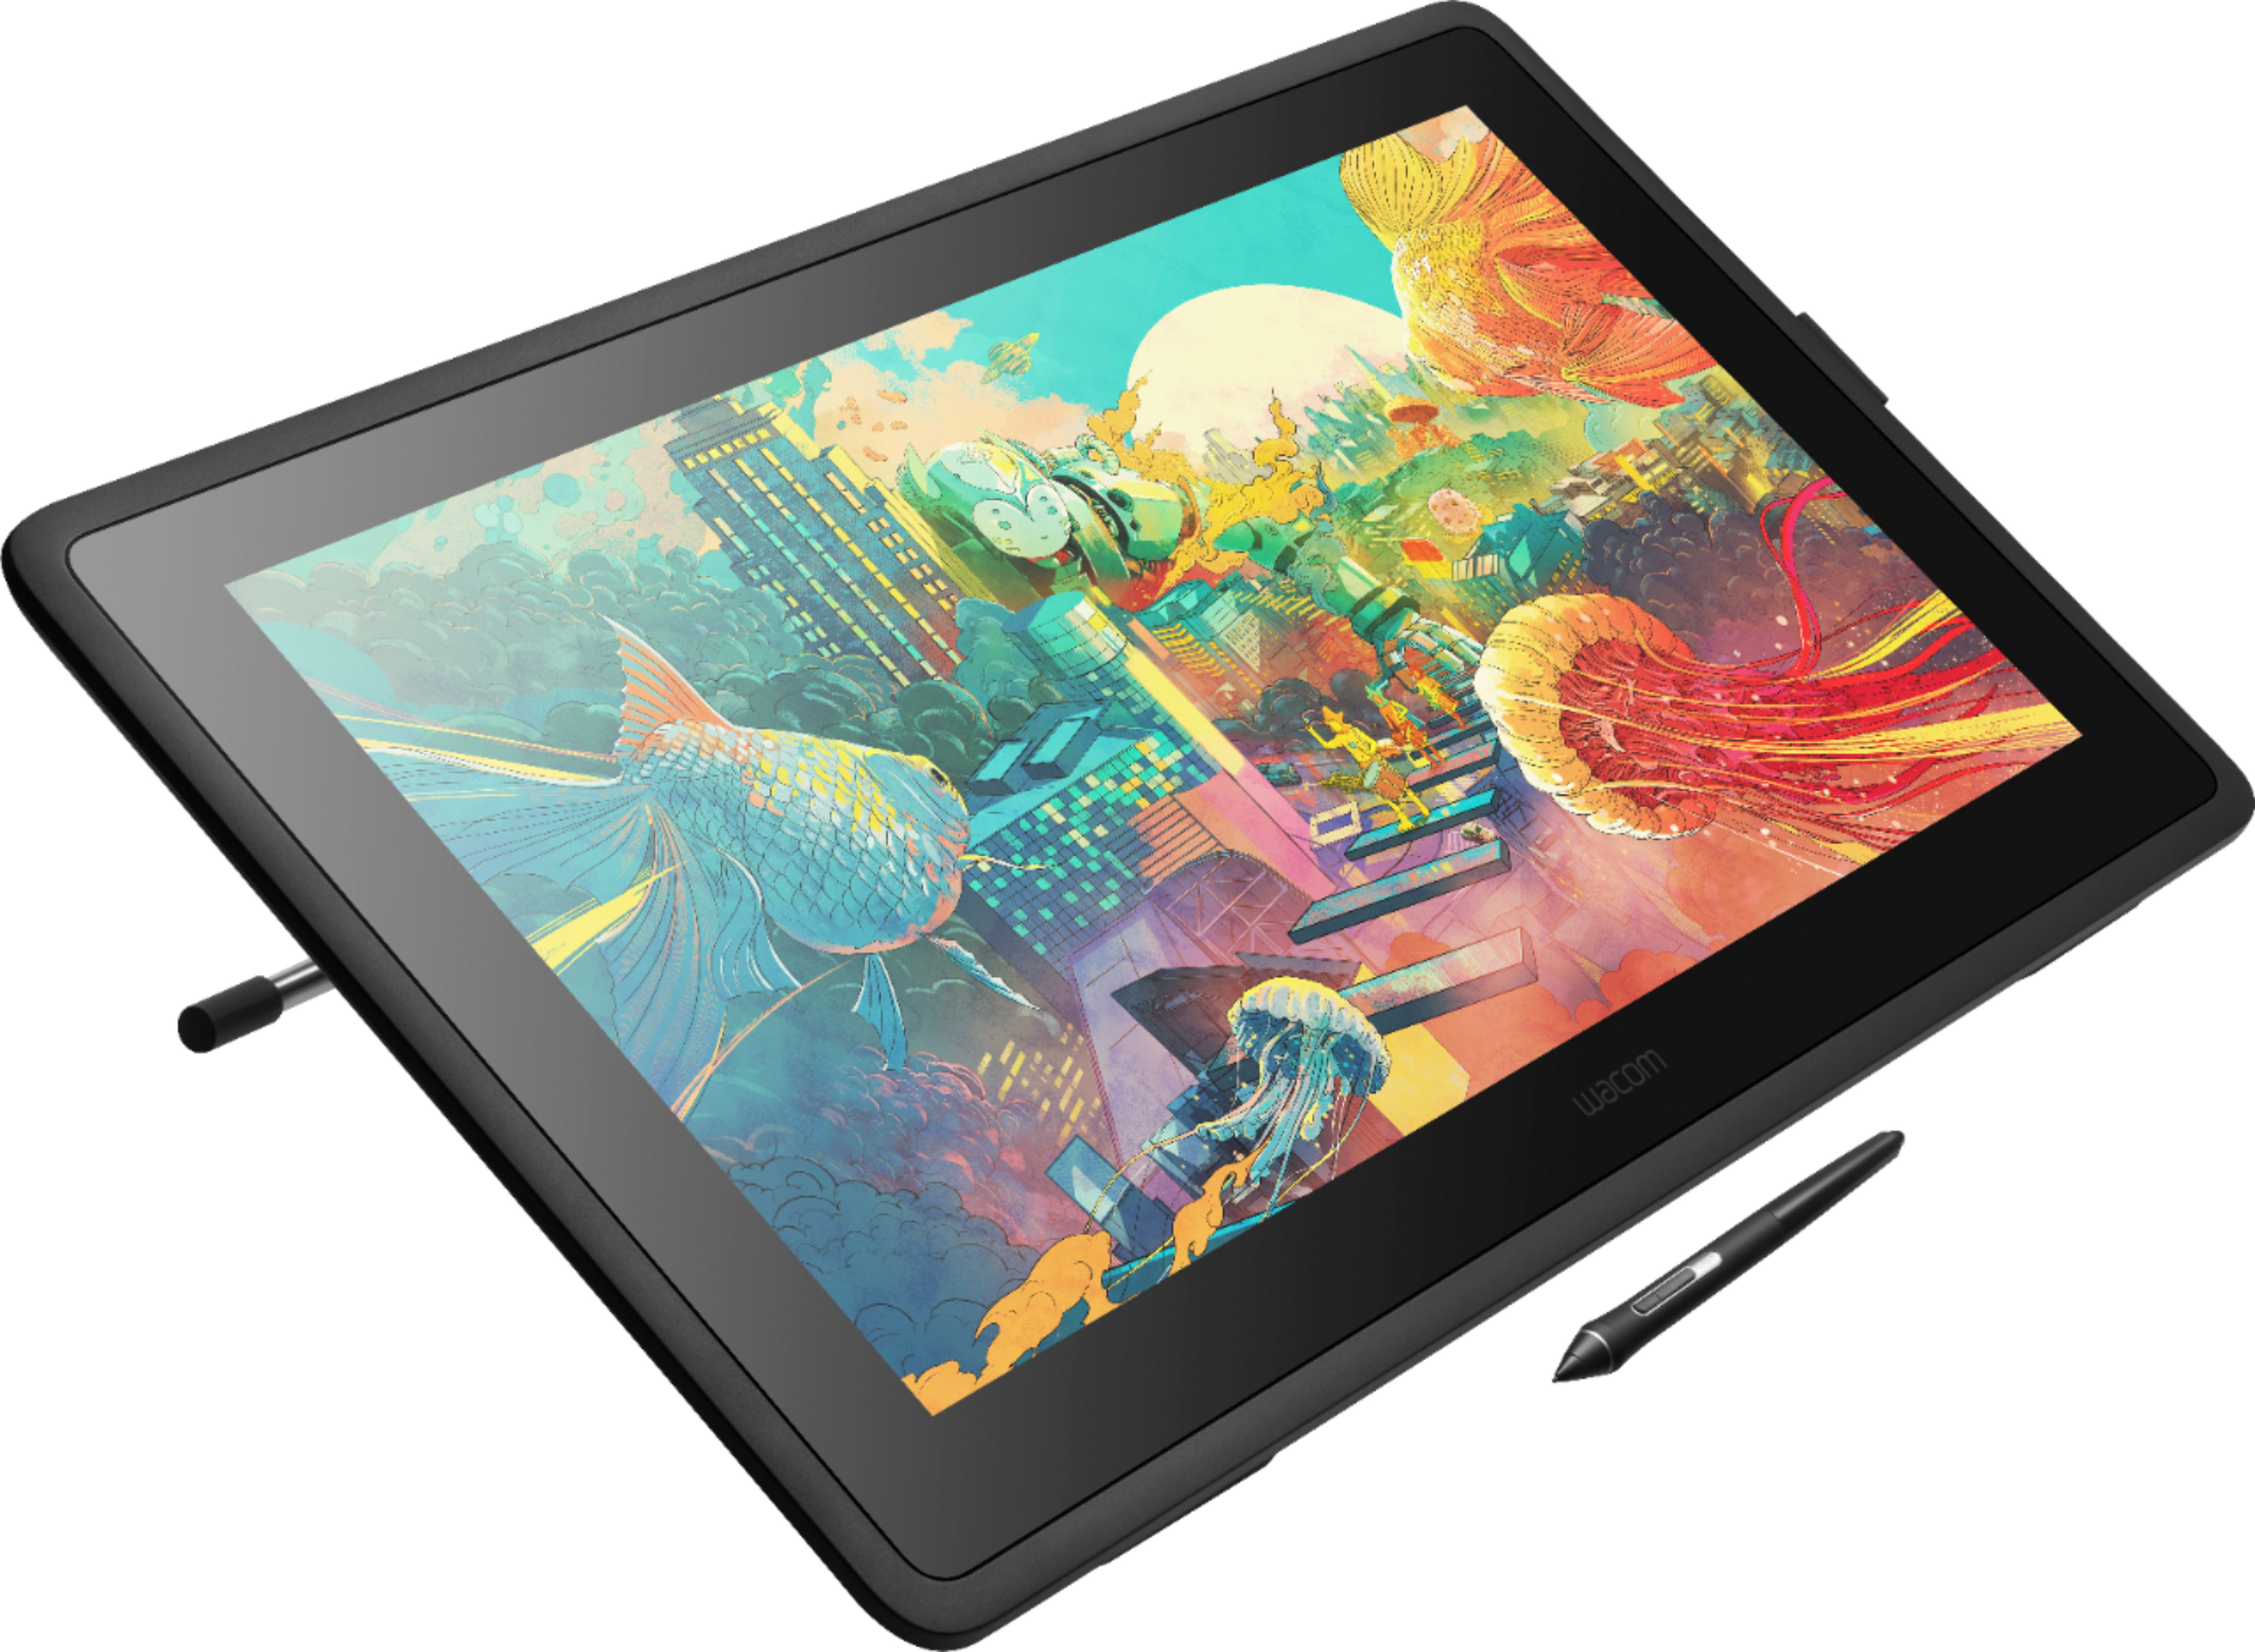 Wacom Cintiq 22 Pen Display Drawing Tablet Black DTK2260K0A - Best Buy